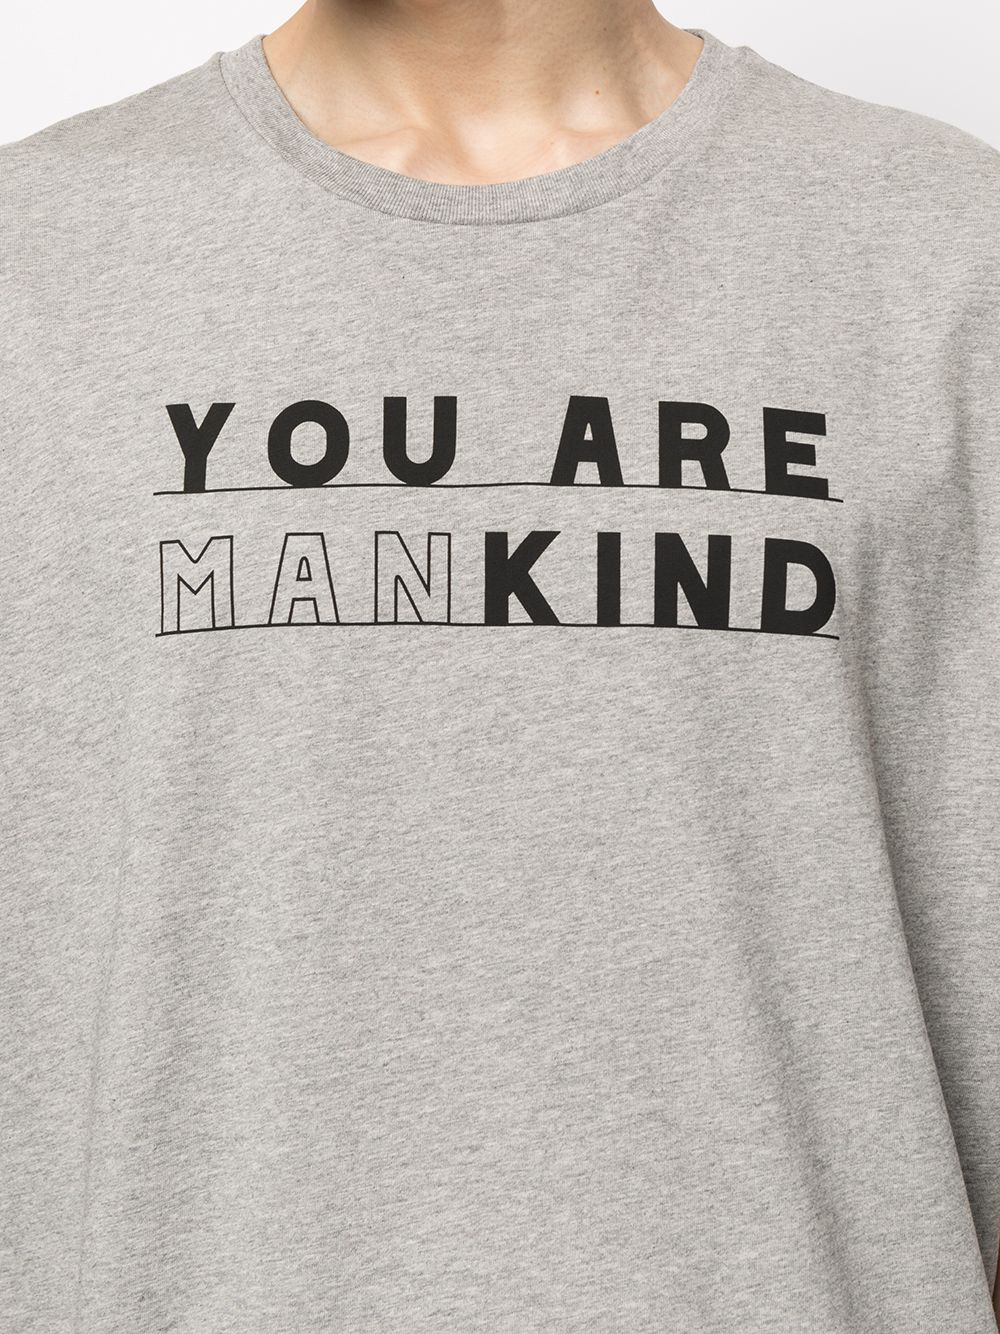 футболка с надписью 7 for all mankind 165303318876